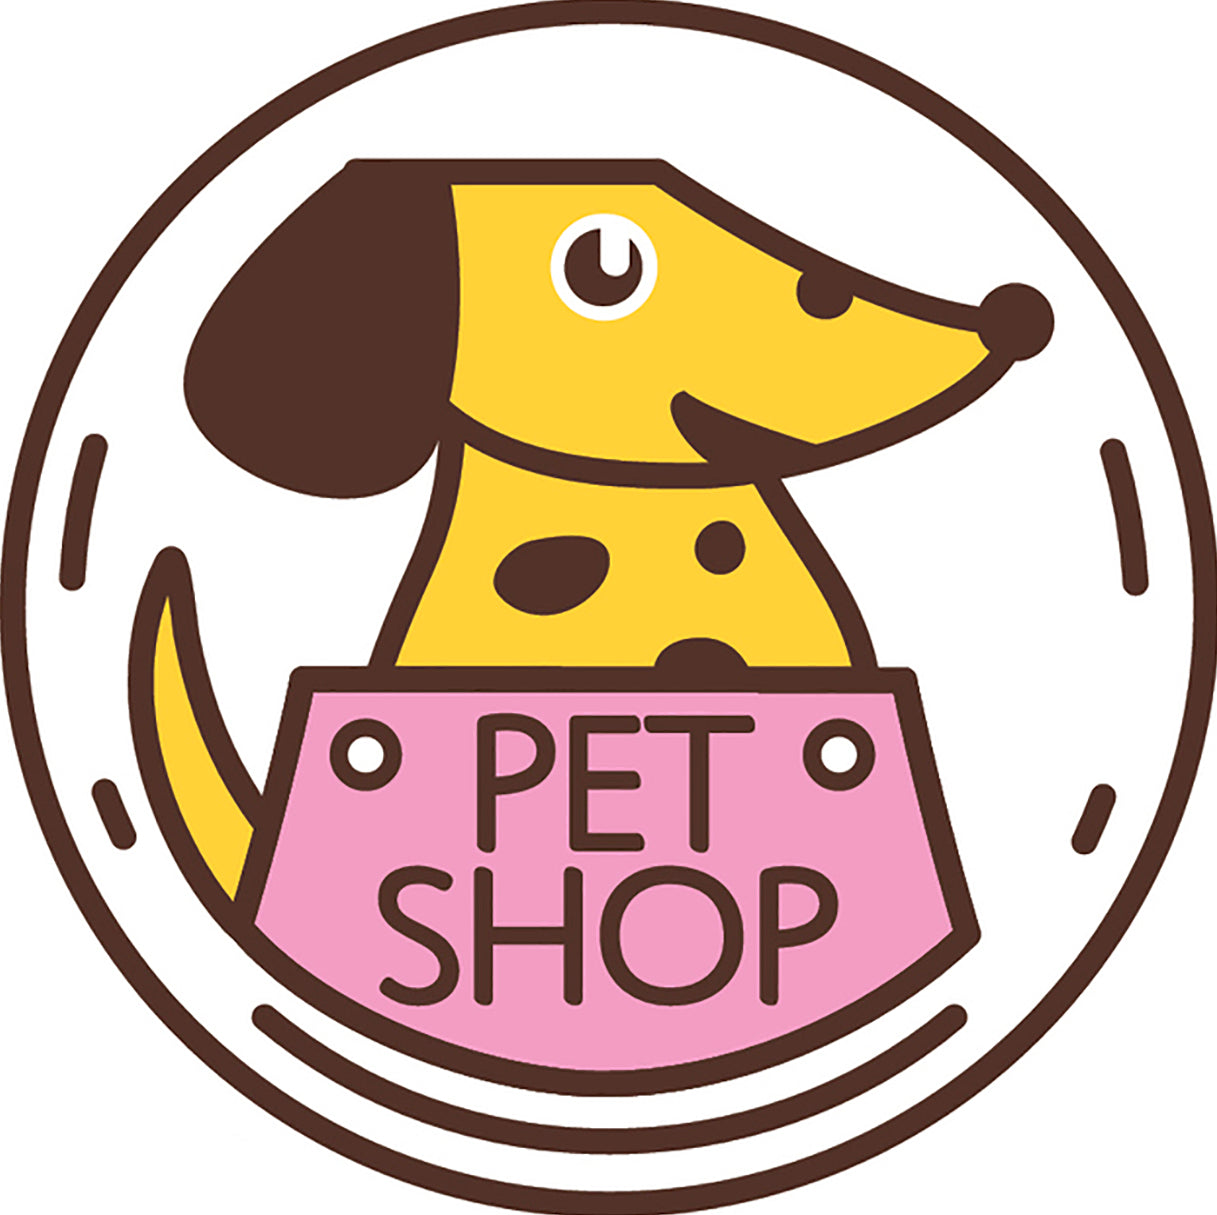 Cute Veterinary Clinic Pet Shop Cartoon Logo Icon #2 Vinyl Decal Sticker